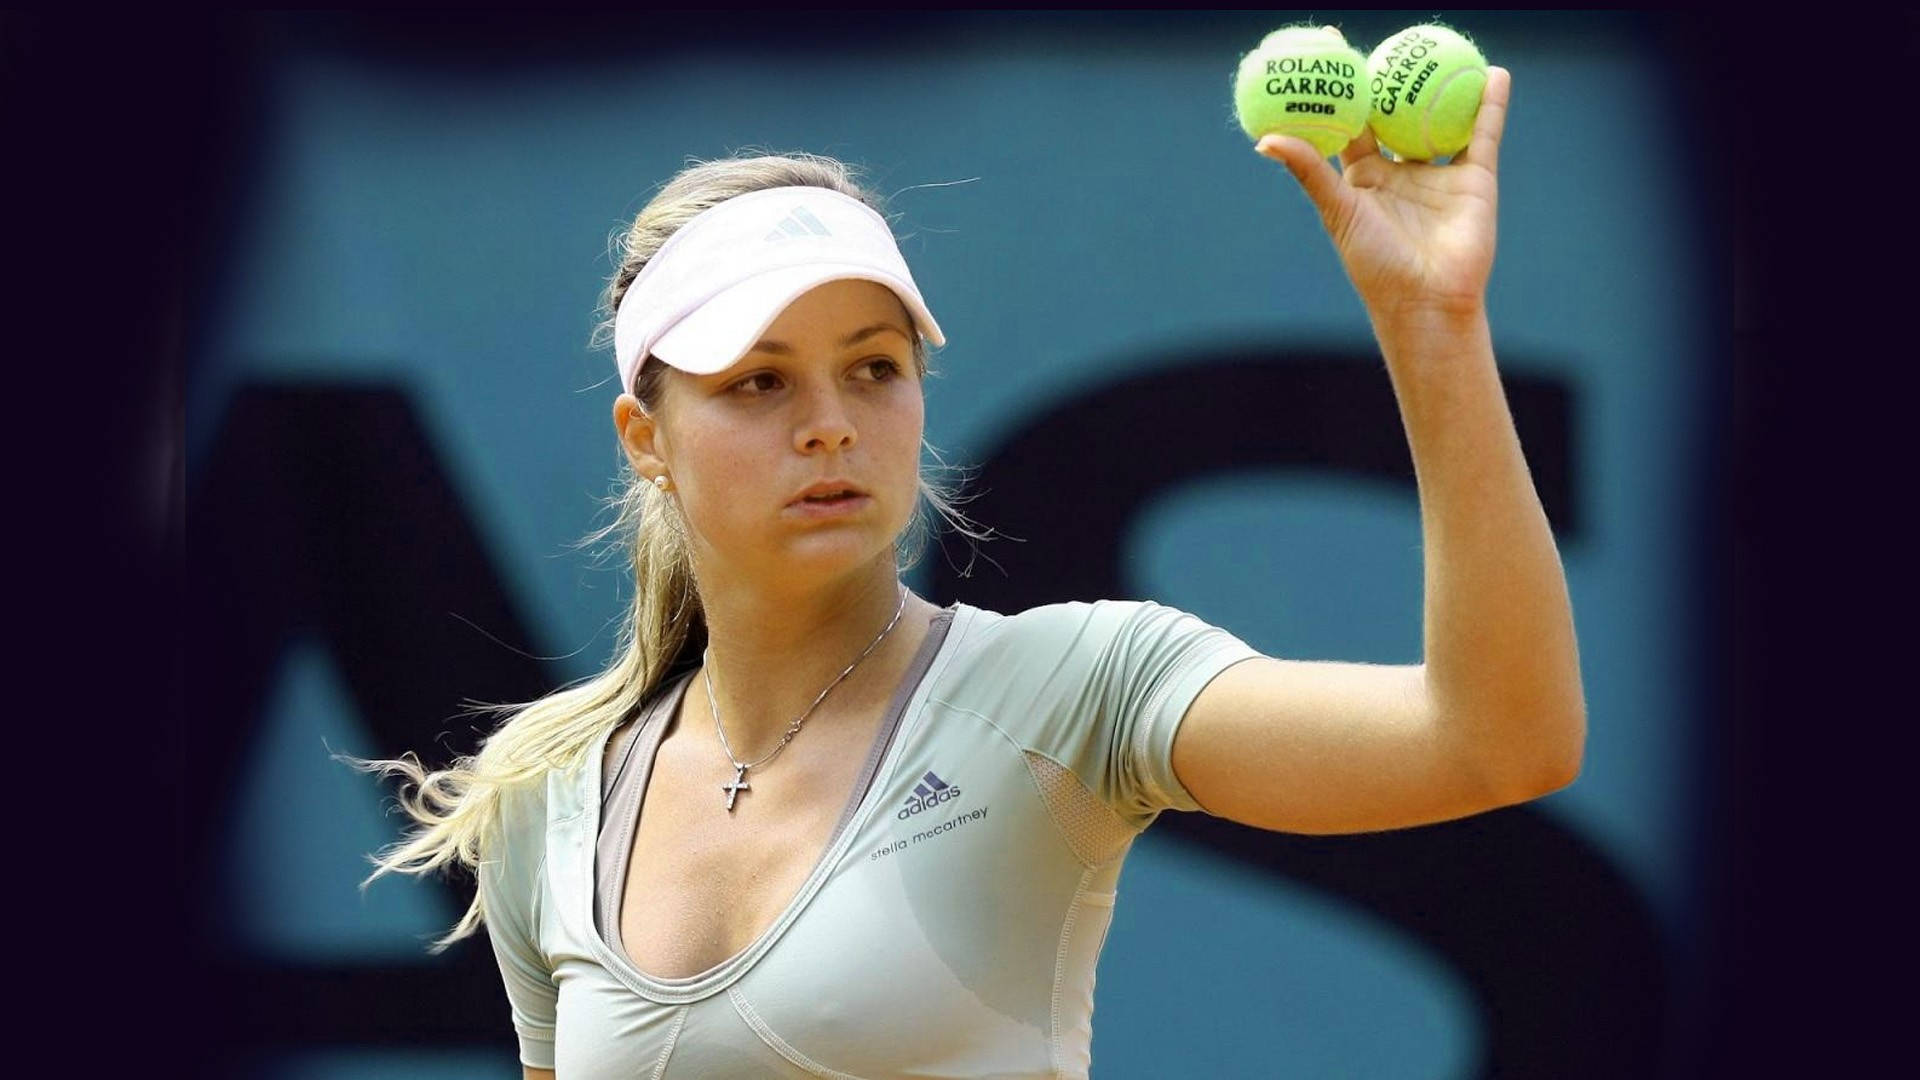 Maria Kirilenko in action with two tennis balls Wallpaper